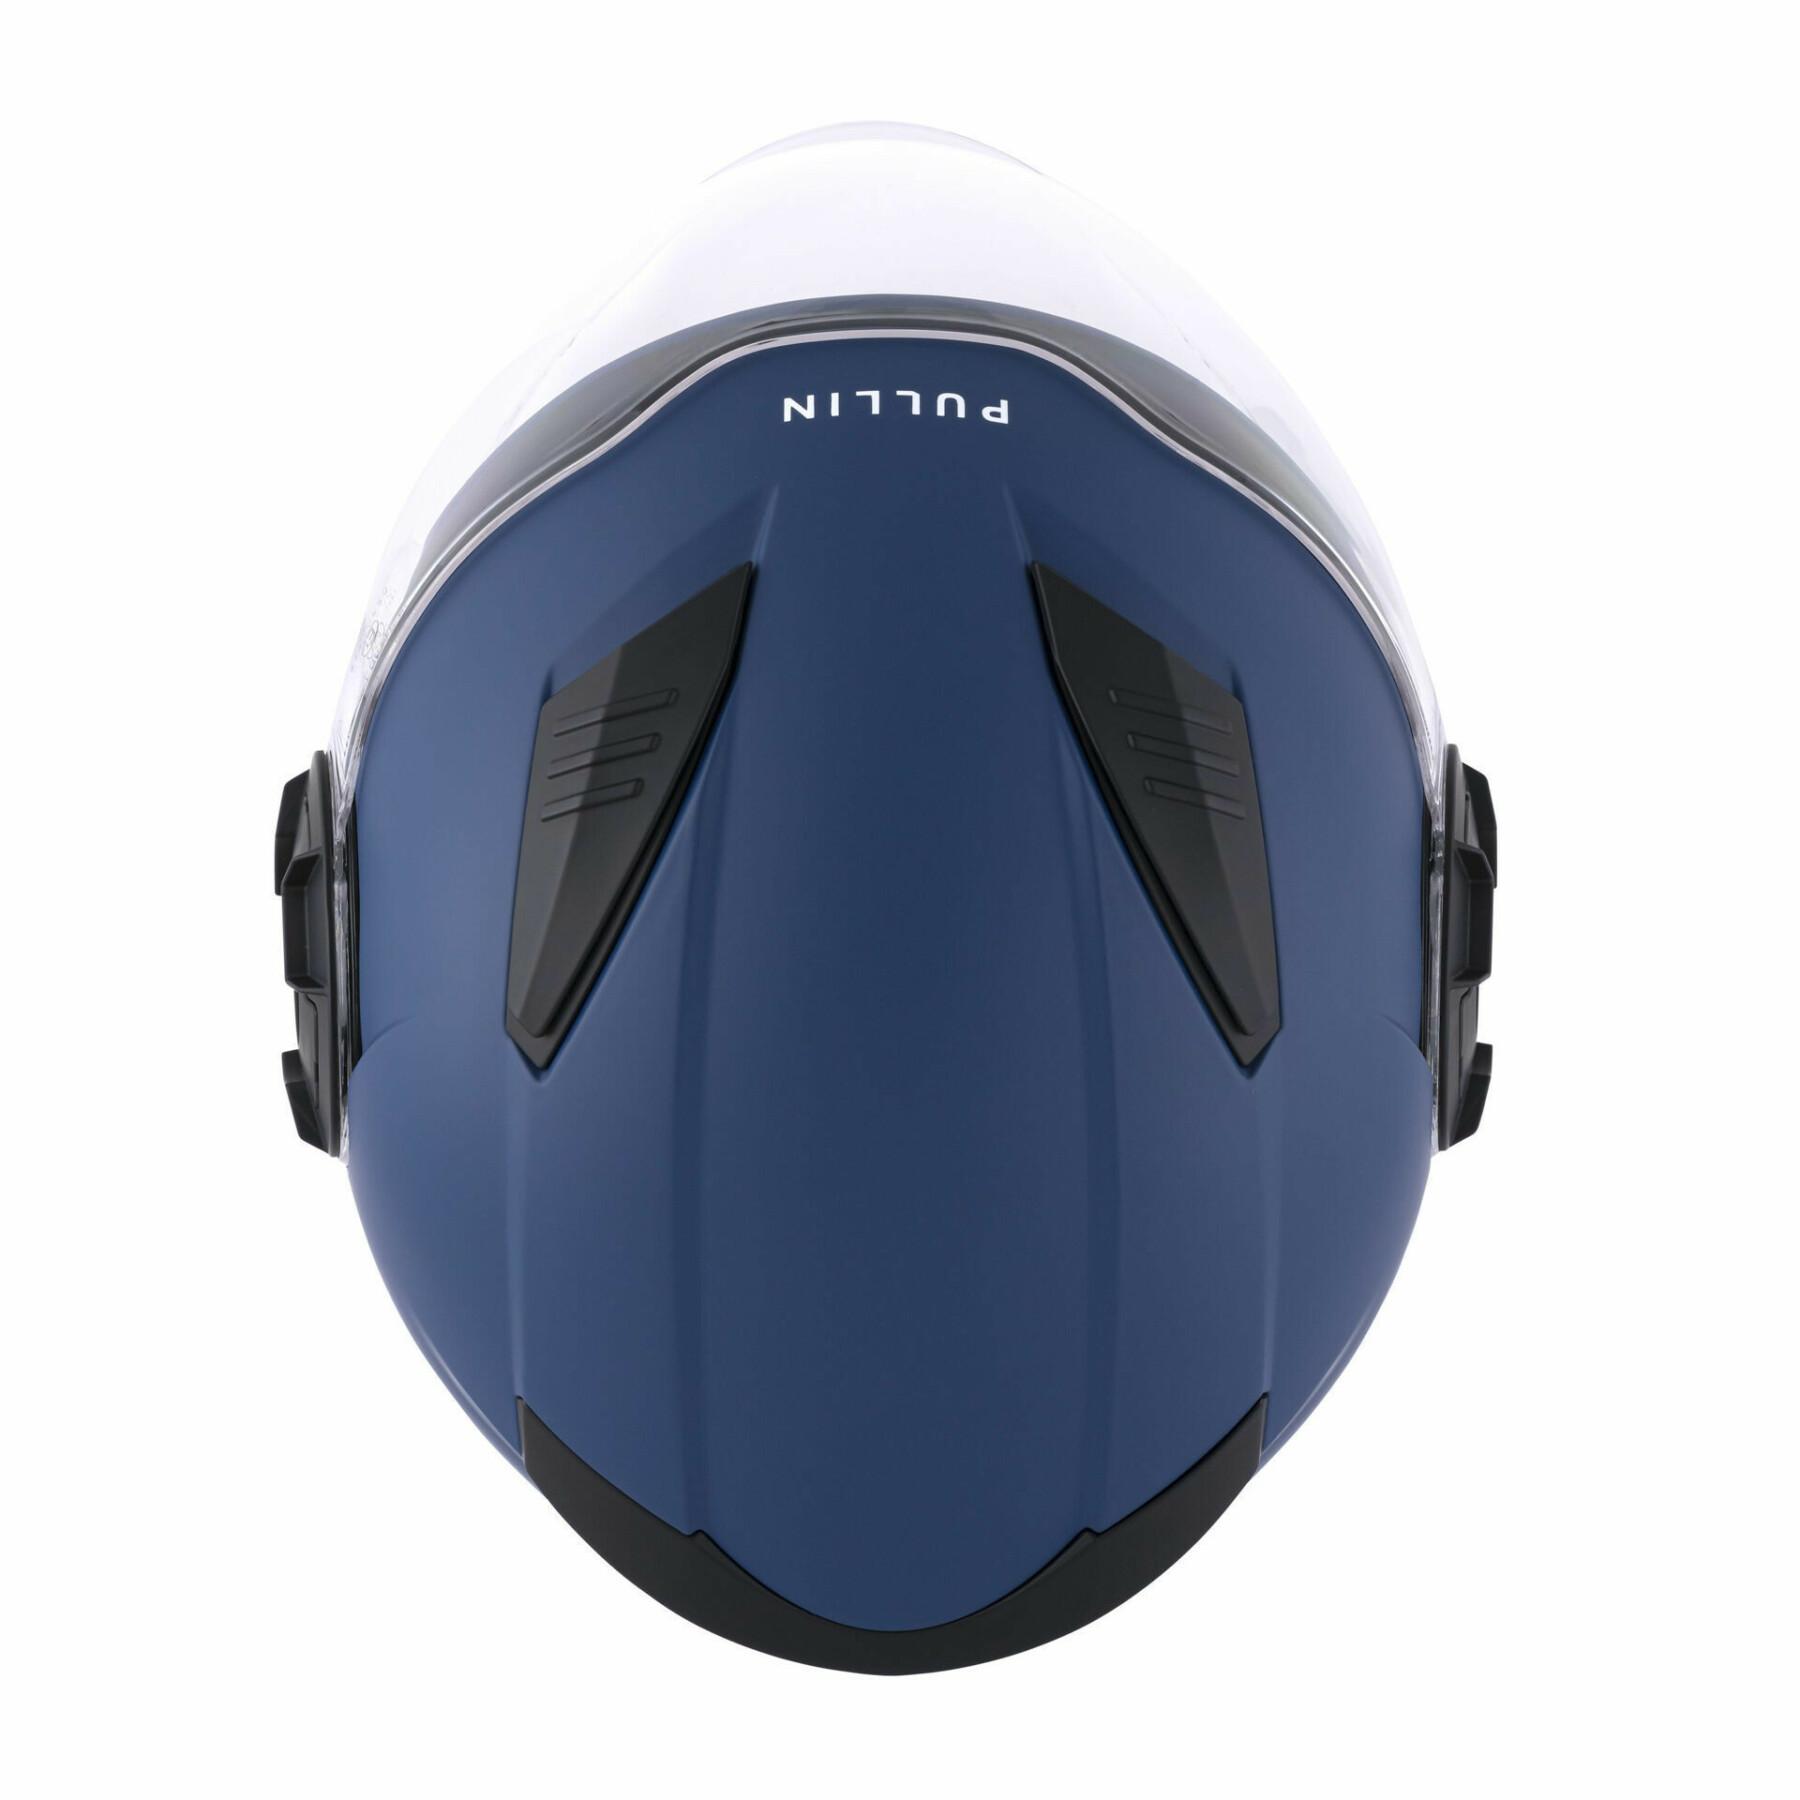 Jet motorcycle helmet Pull-in open face